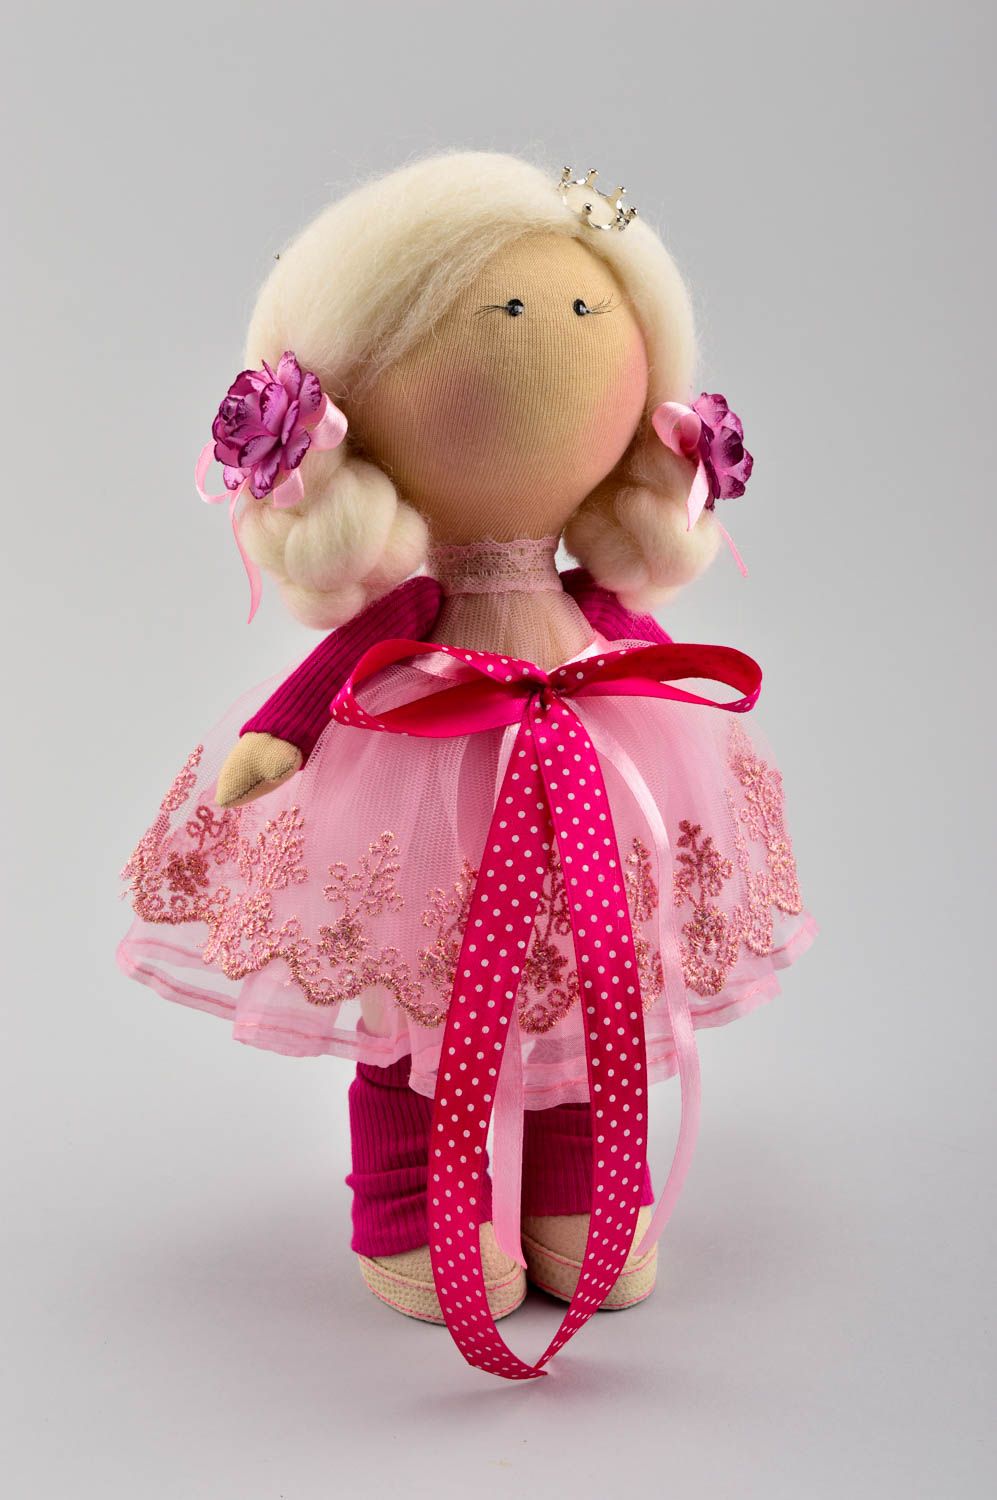 Handmade stylish doll interior doll handmade toys for children nursery decor photo 1